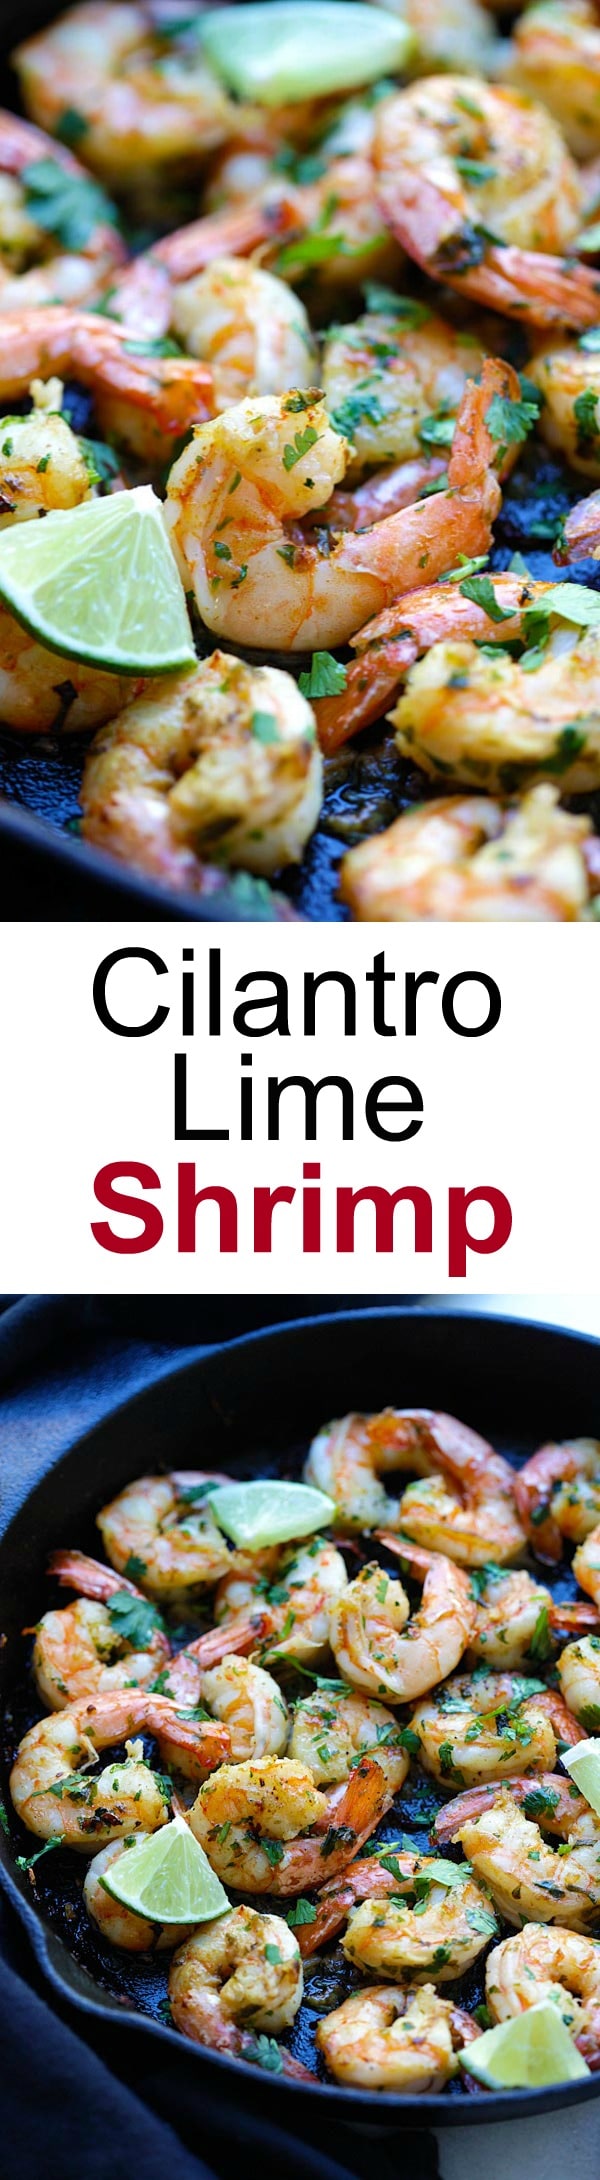 Cilantro Lime Shrimp – best shrimp ever with cilantro, lime & garlic on sizzling skillet. Crazy delicious recipe, takes 15 mins | rasamalaysia.com